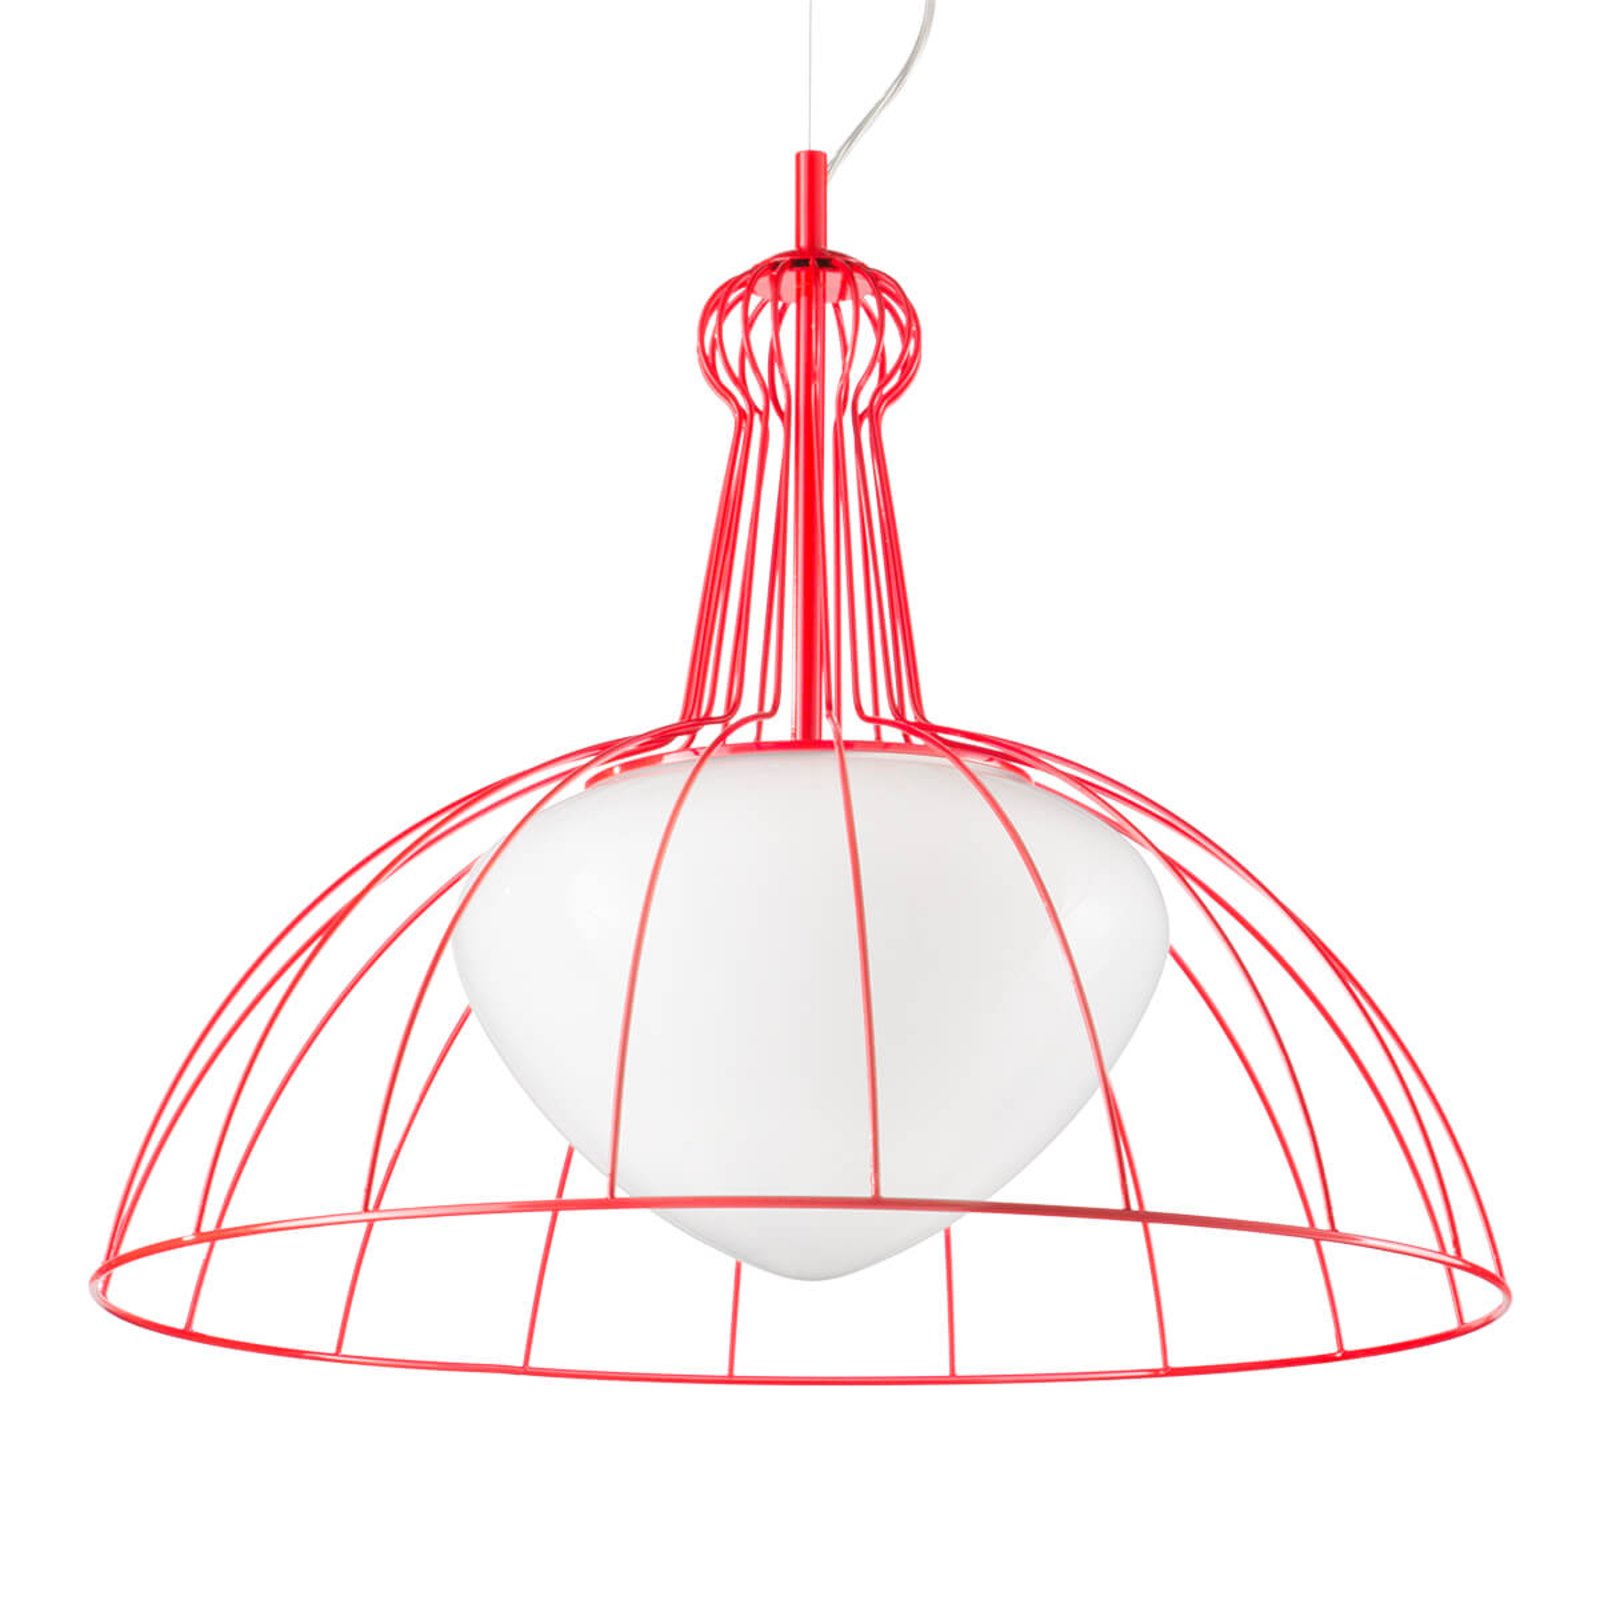 designer-hanglamp Lab made in Italy | Lampen24.nl